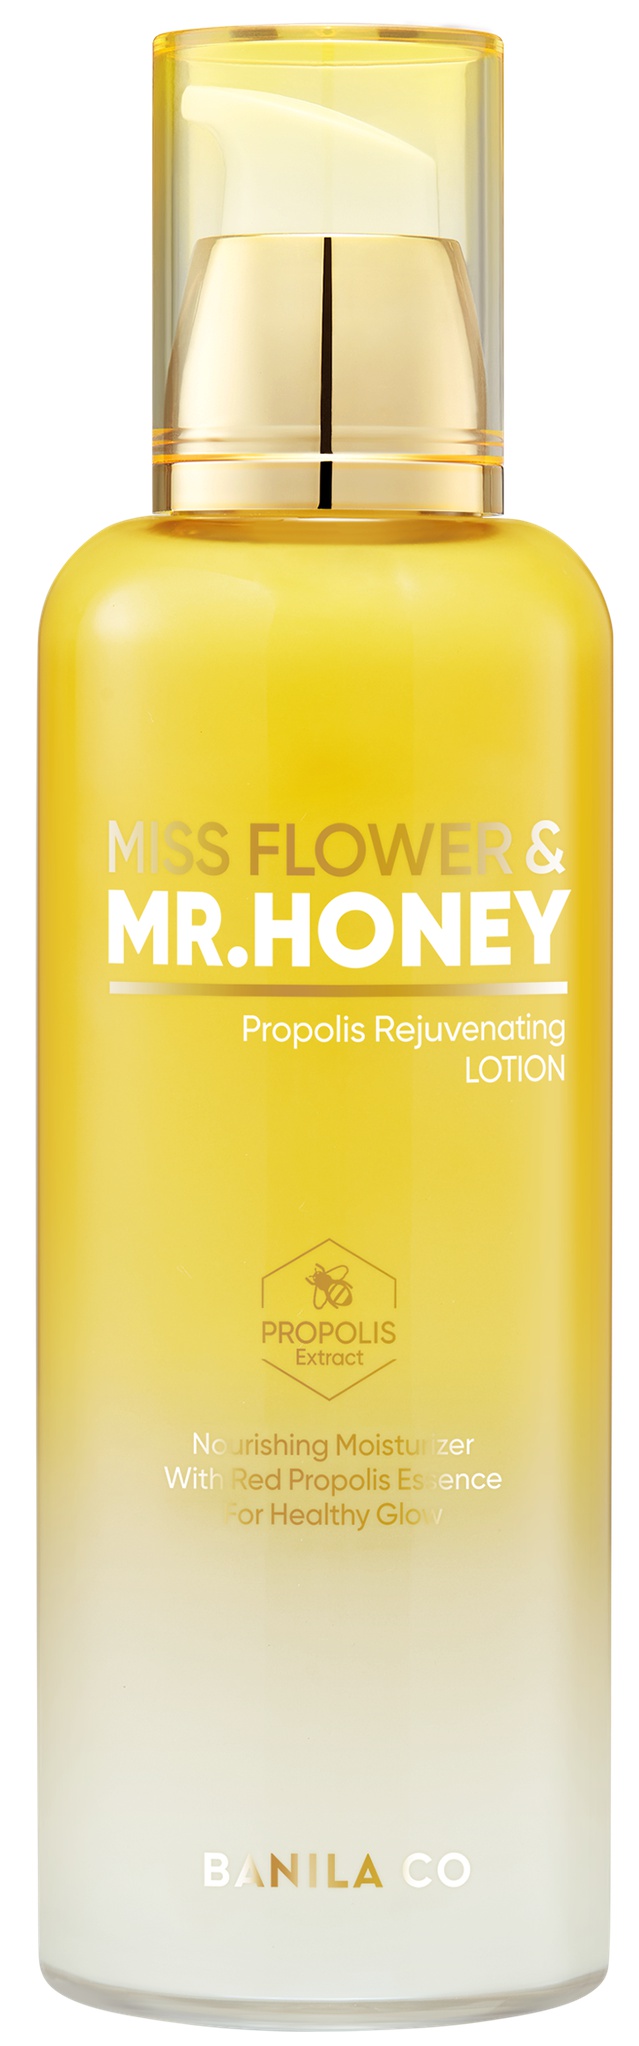 Banila Co Miss Flower & Mr.honey Propolis Rejuvenating Lotion